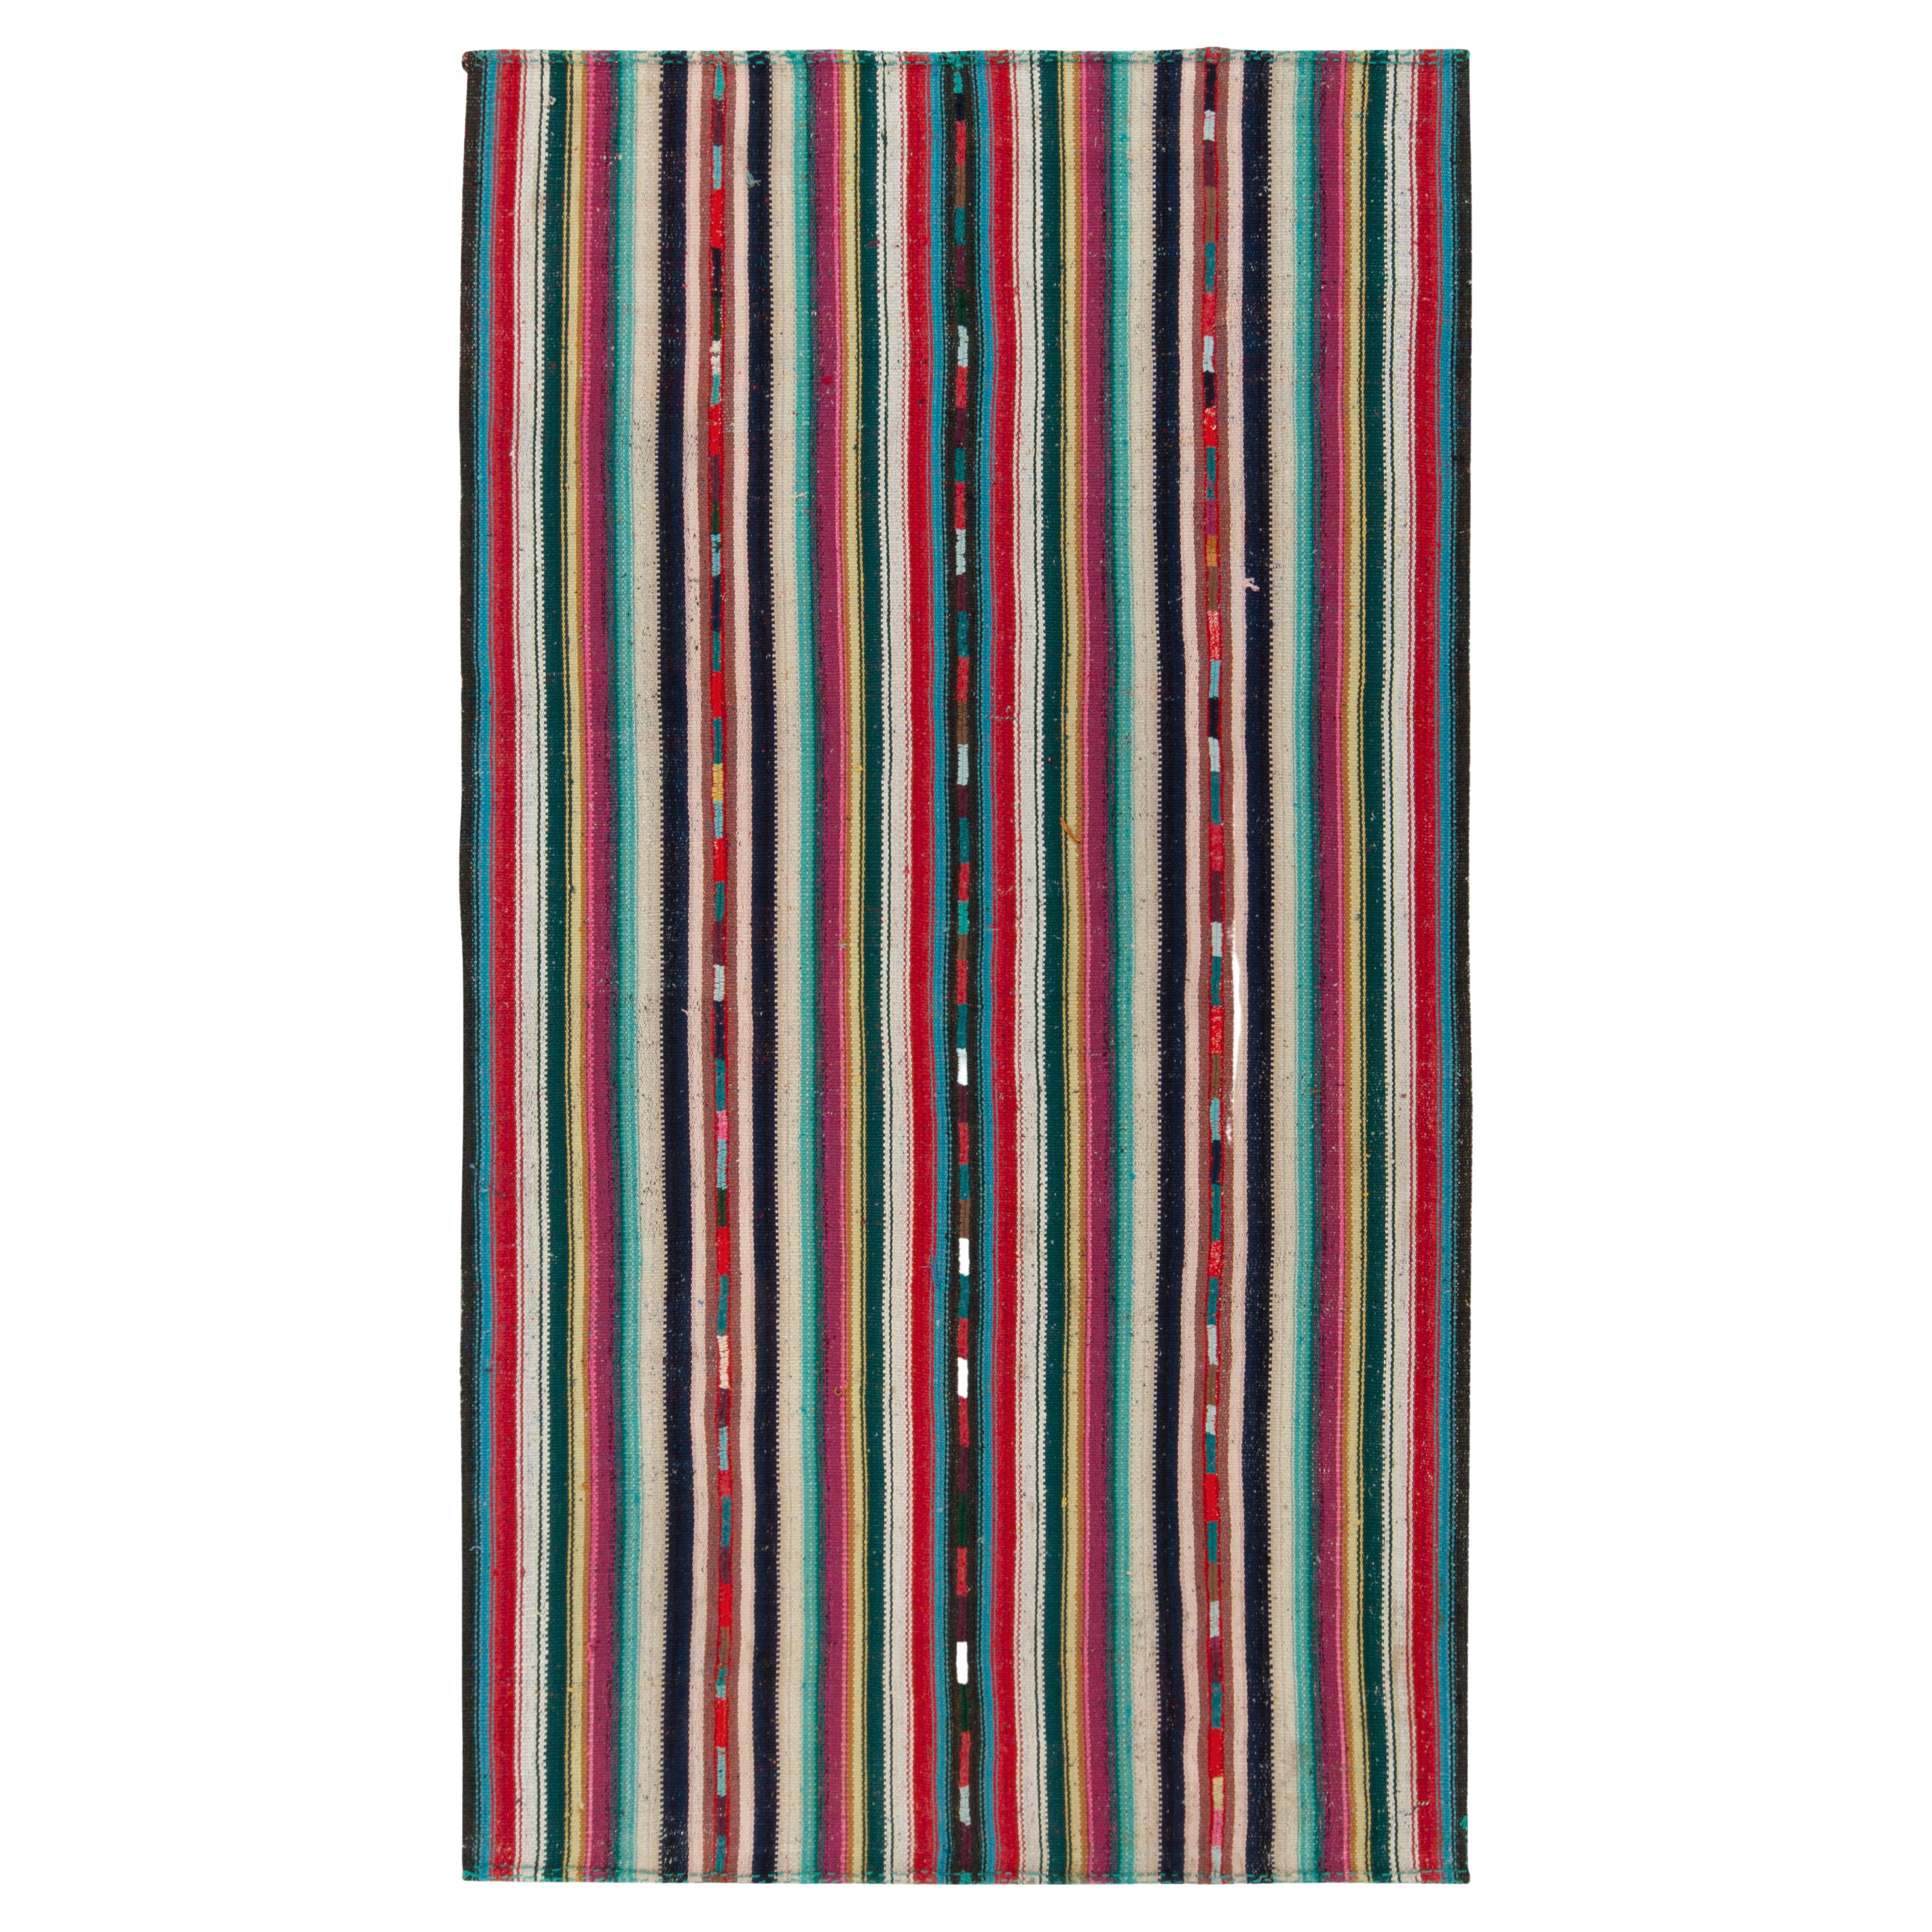 1950s Vintage Chaput Kilim Style in Multicolor Stripe Patterns by Rug & Kilim